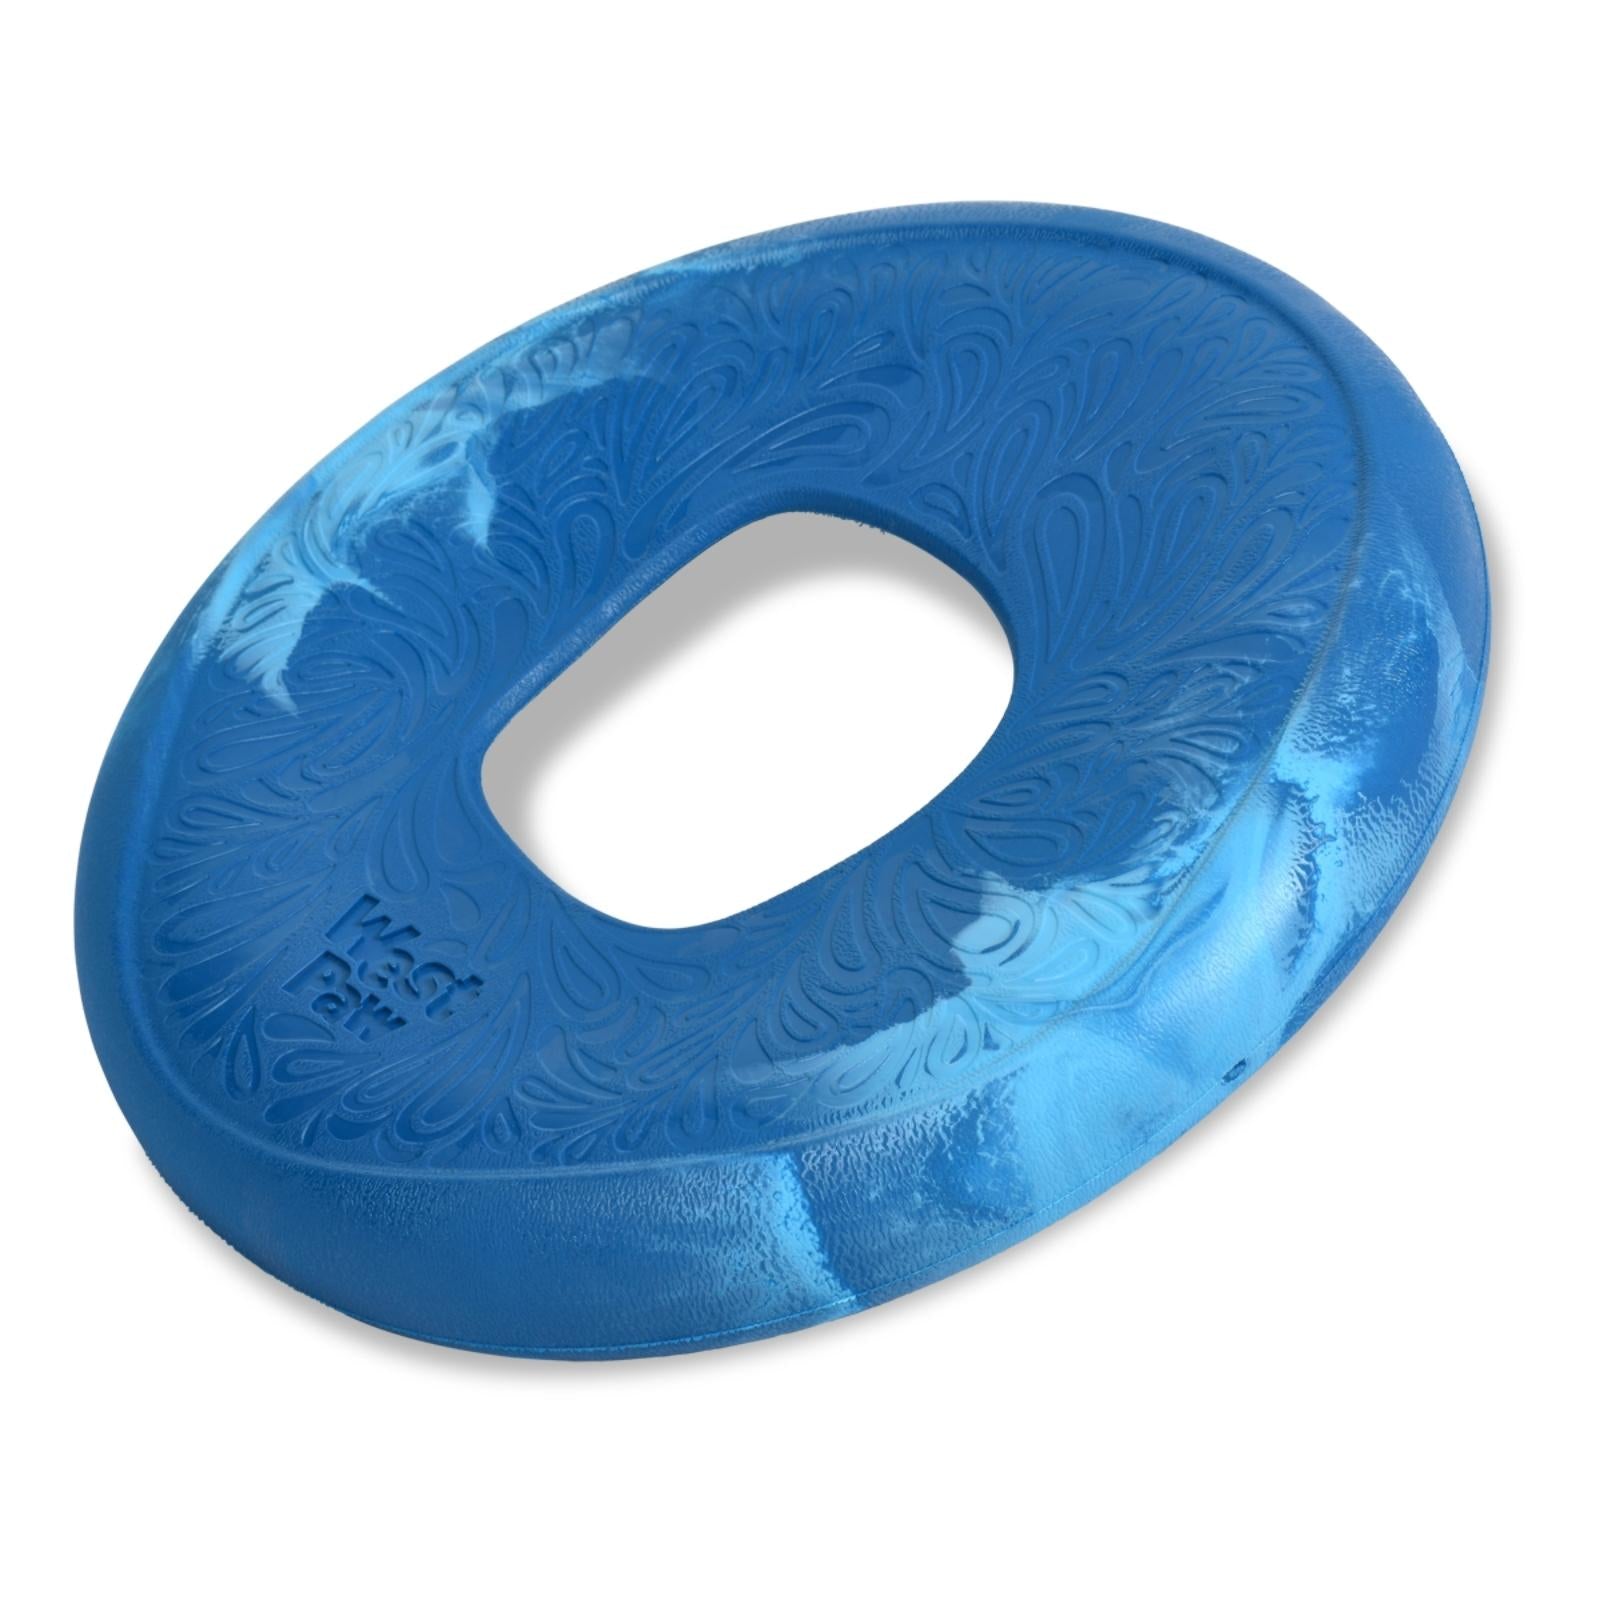 SAILZ de West Paw® color Azul Surf - Frisbee para Perros